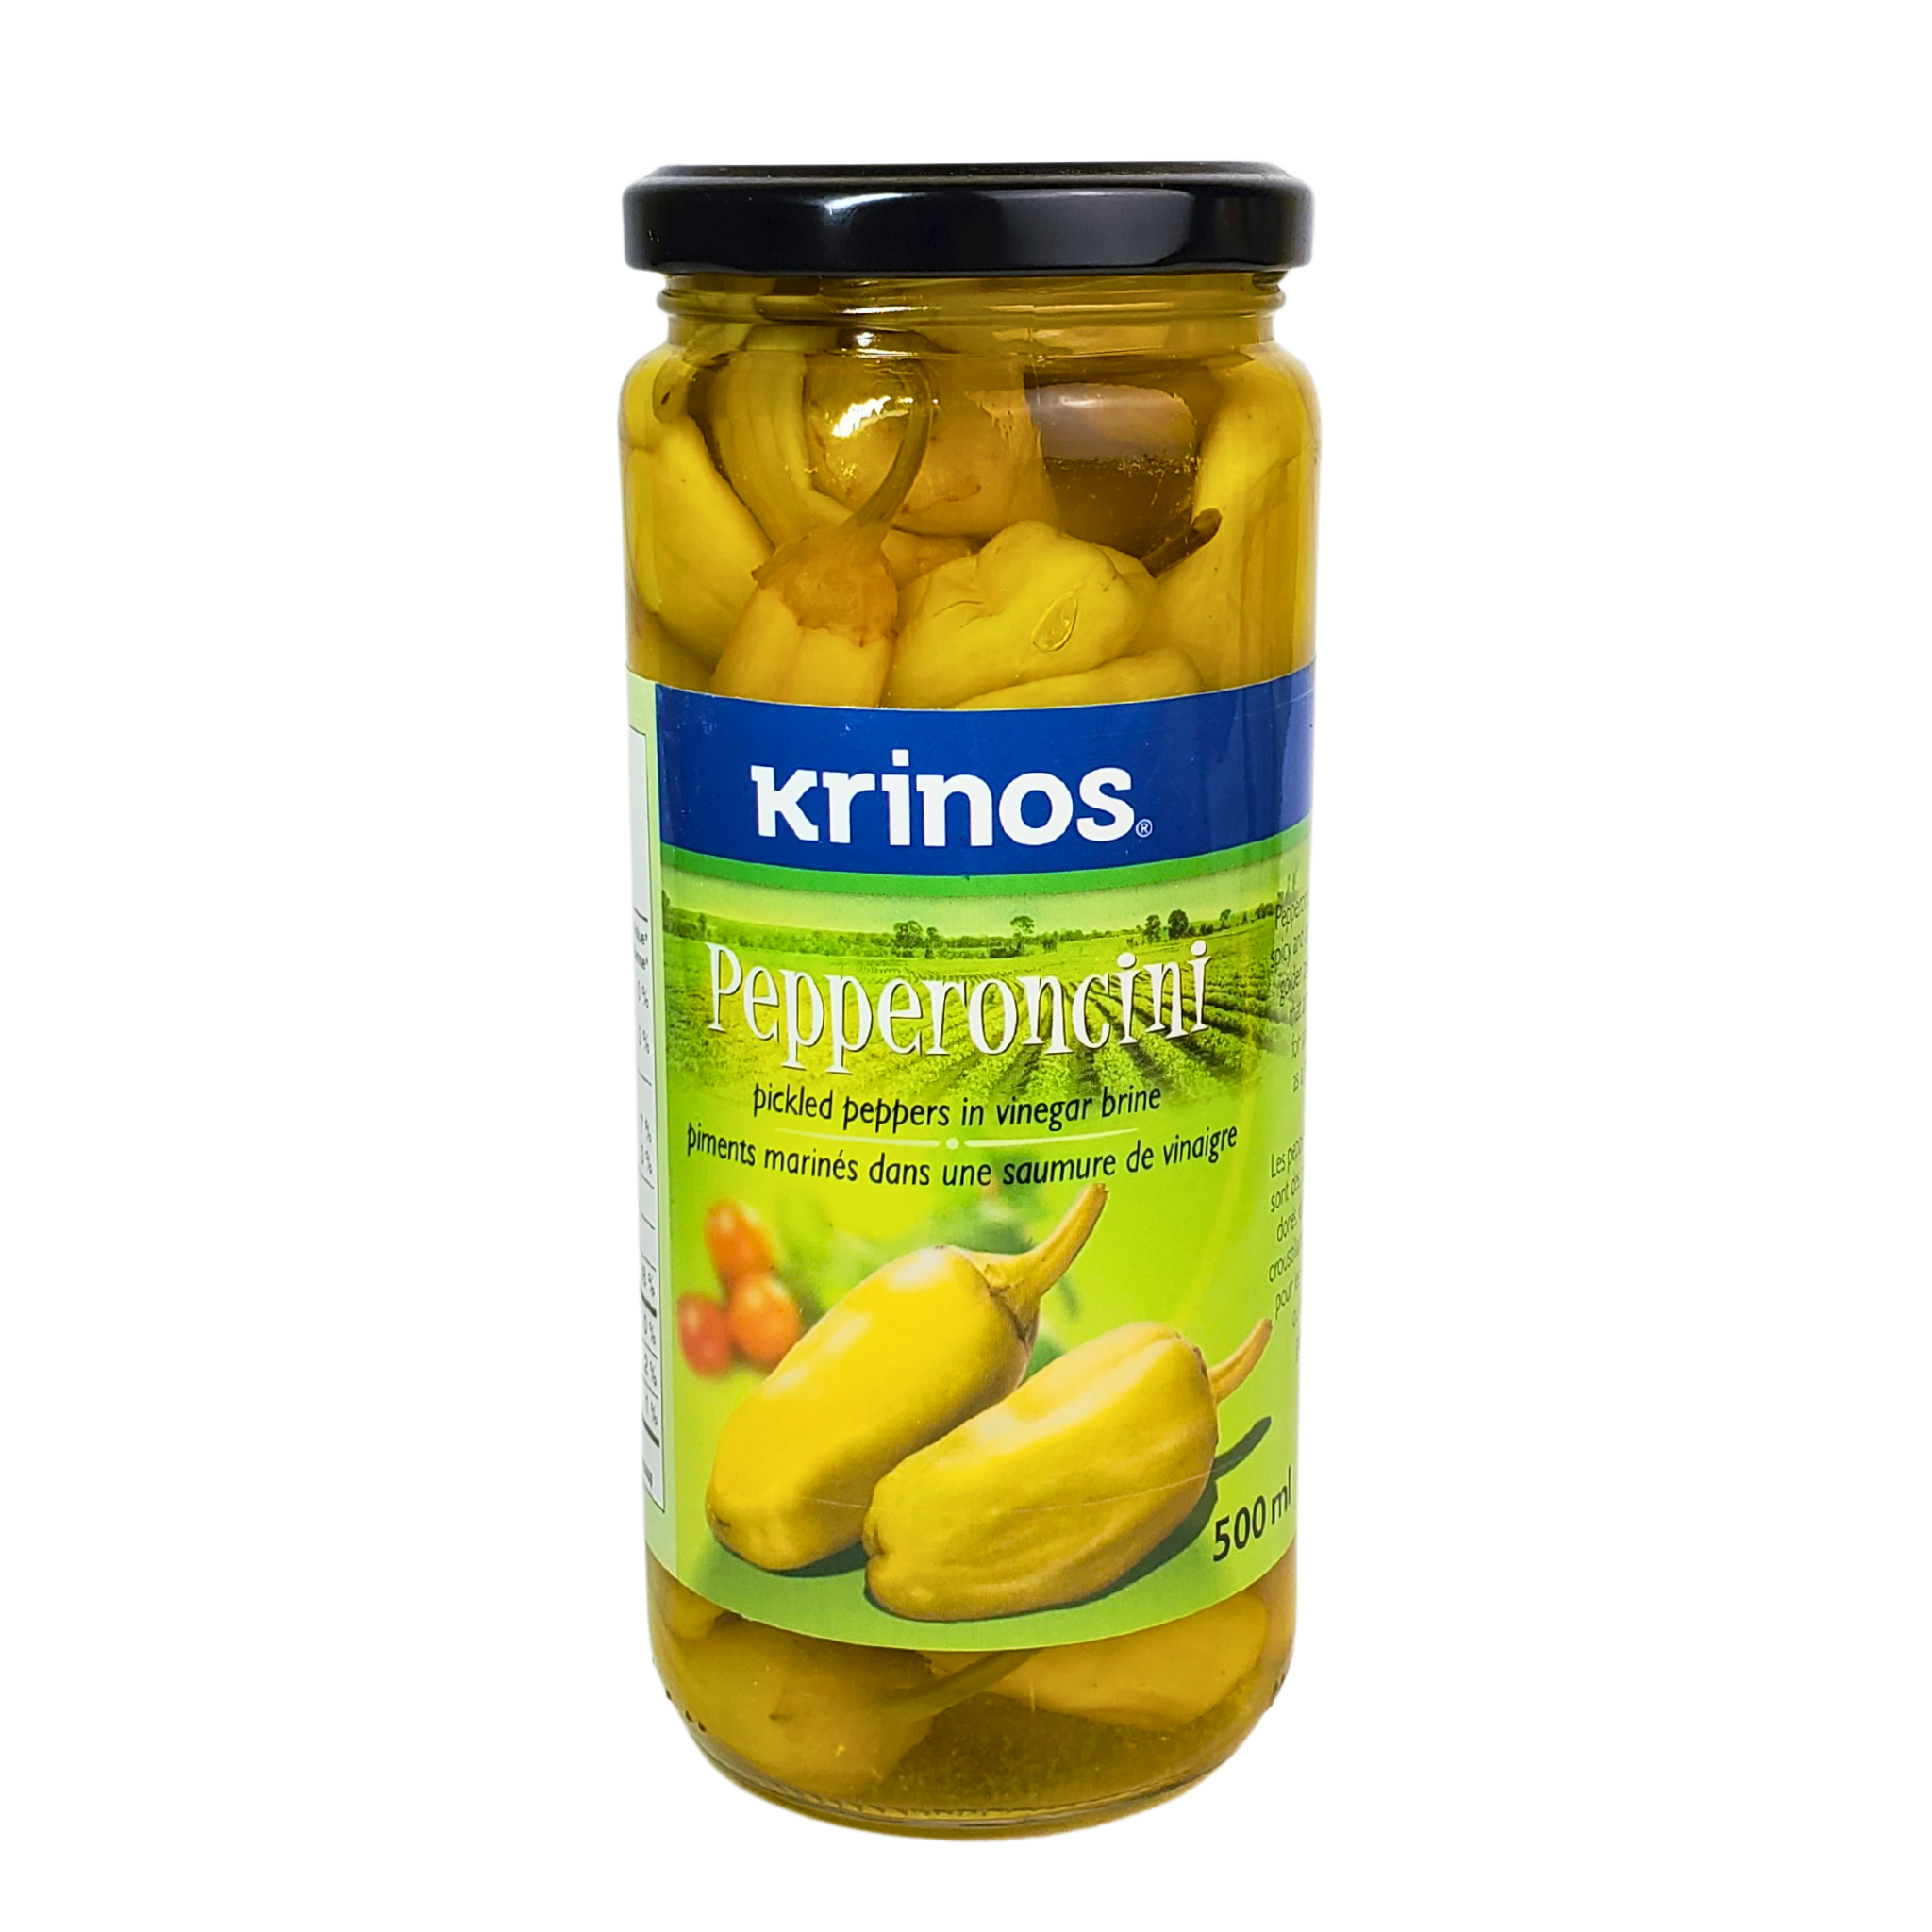 Krinos Pepperoncini Pickled Peppers in Vinegar Brine 500 ml - Piments marines dans une saumure de vinaigre